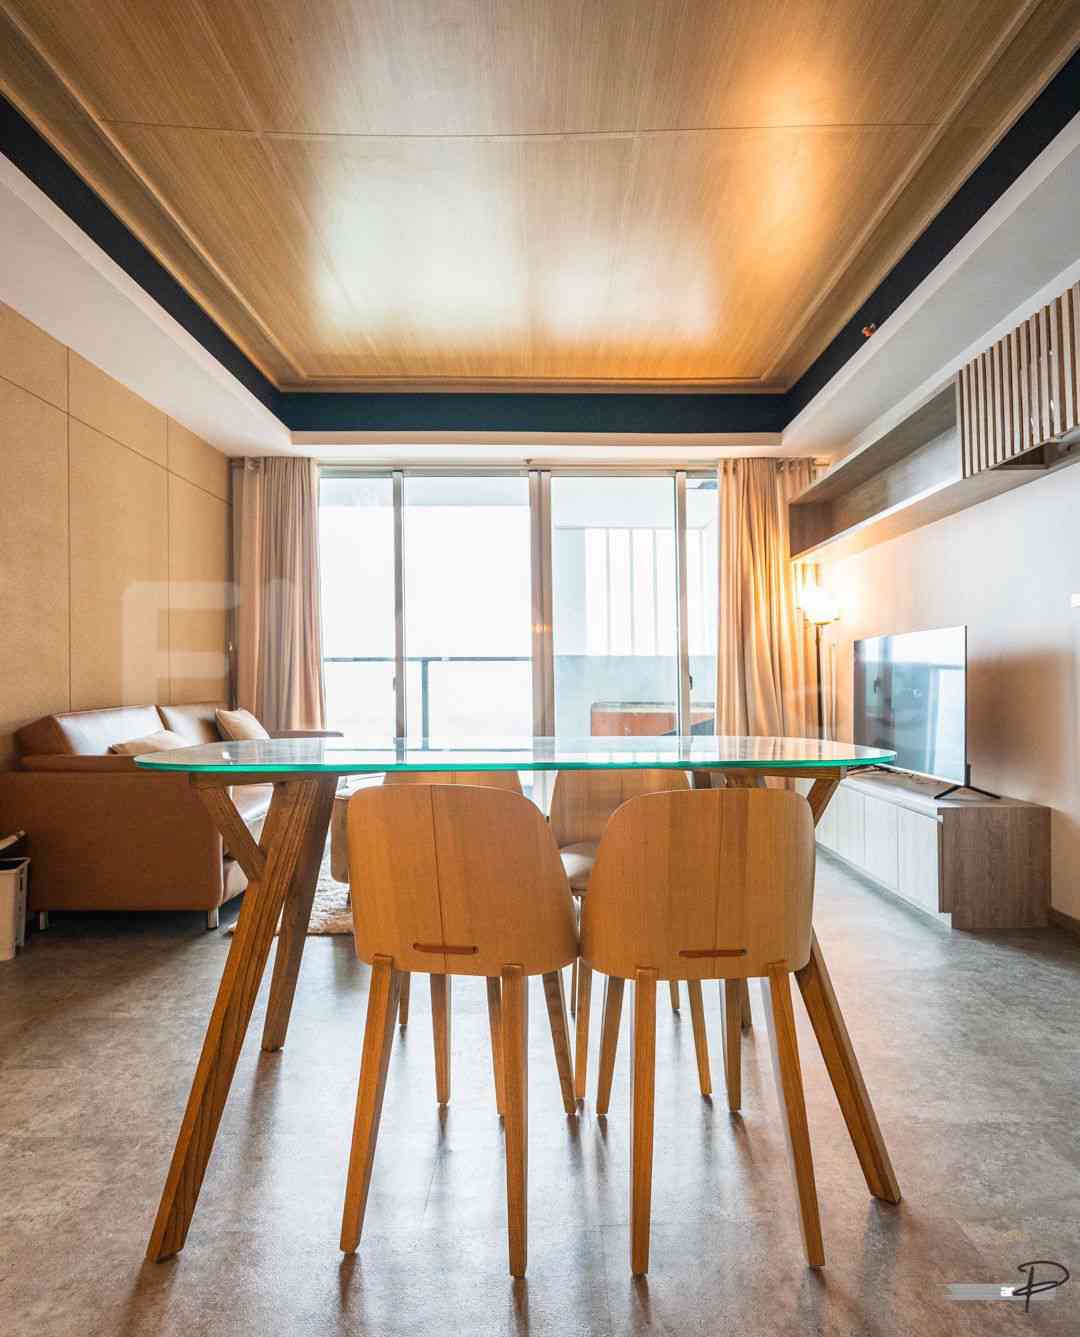 2 Bedroom on 20th Floor for Rent in Kemang Village Residence - fke7b0 2